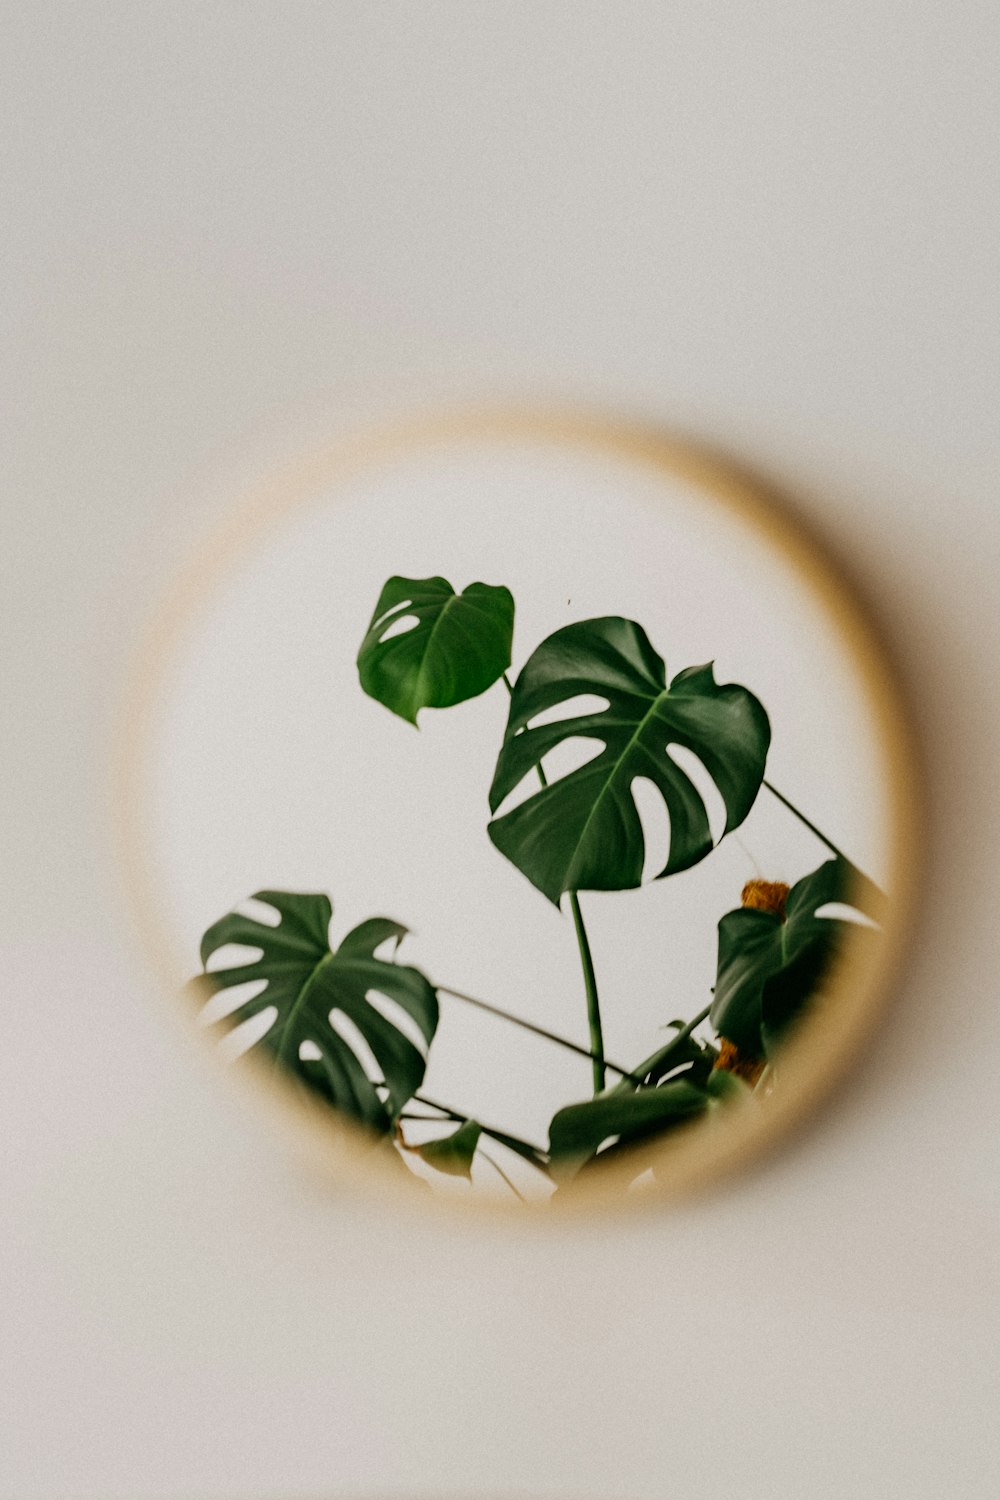 green leaves on white ceramic plate